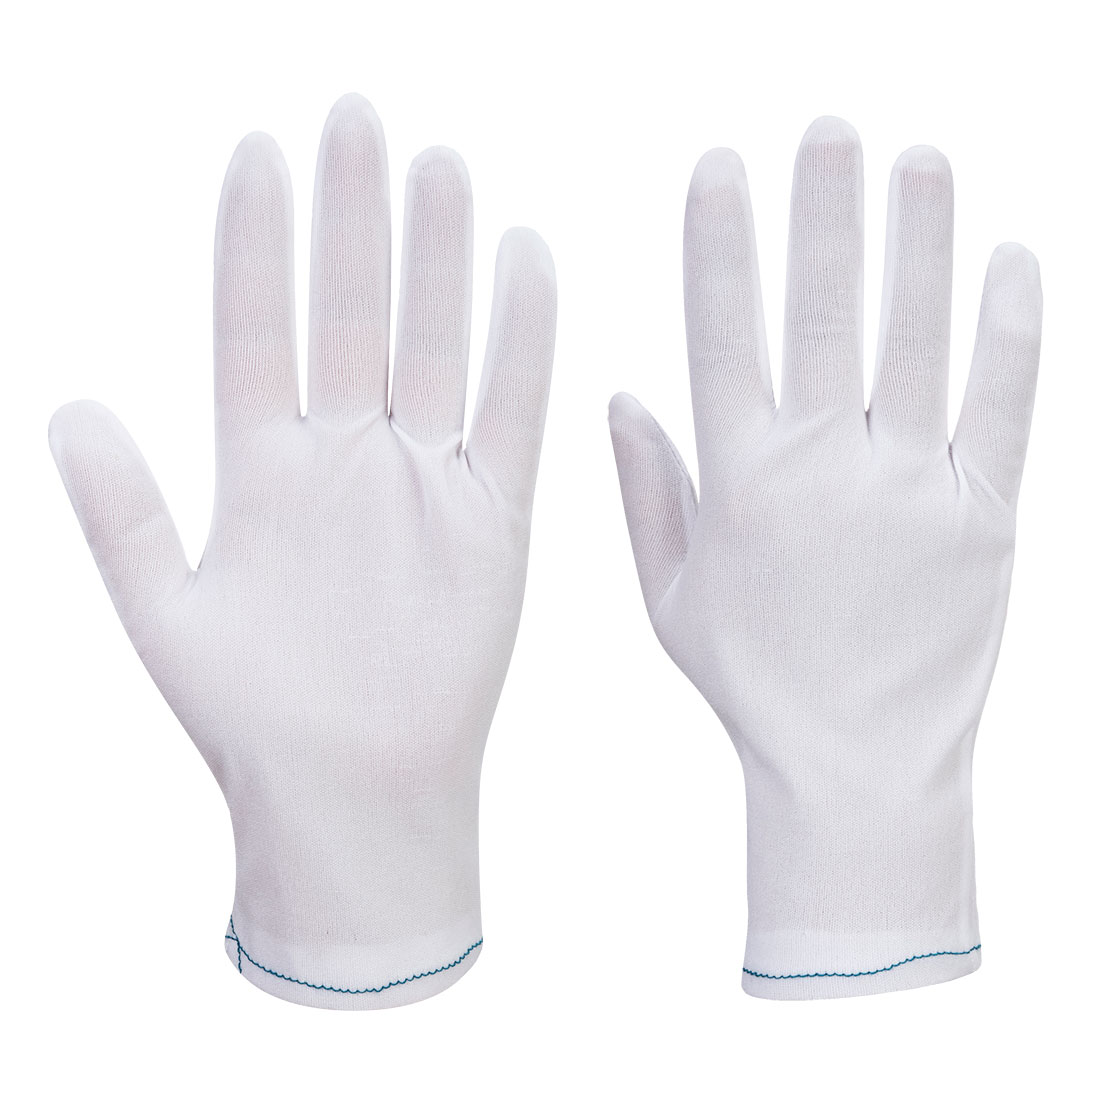 Nylon Inspection Glove (600 Pairs) - White